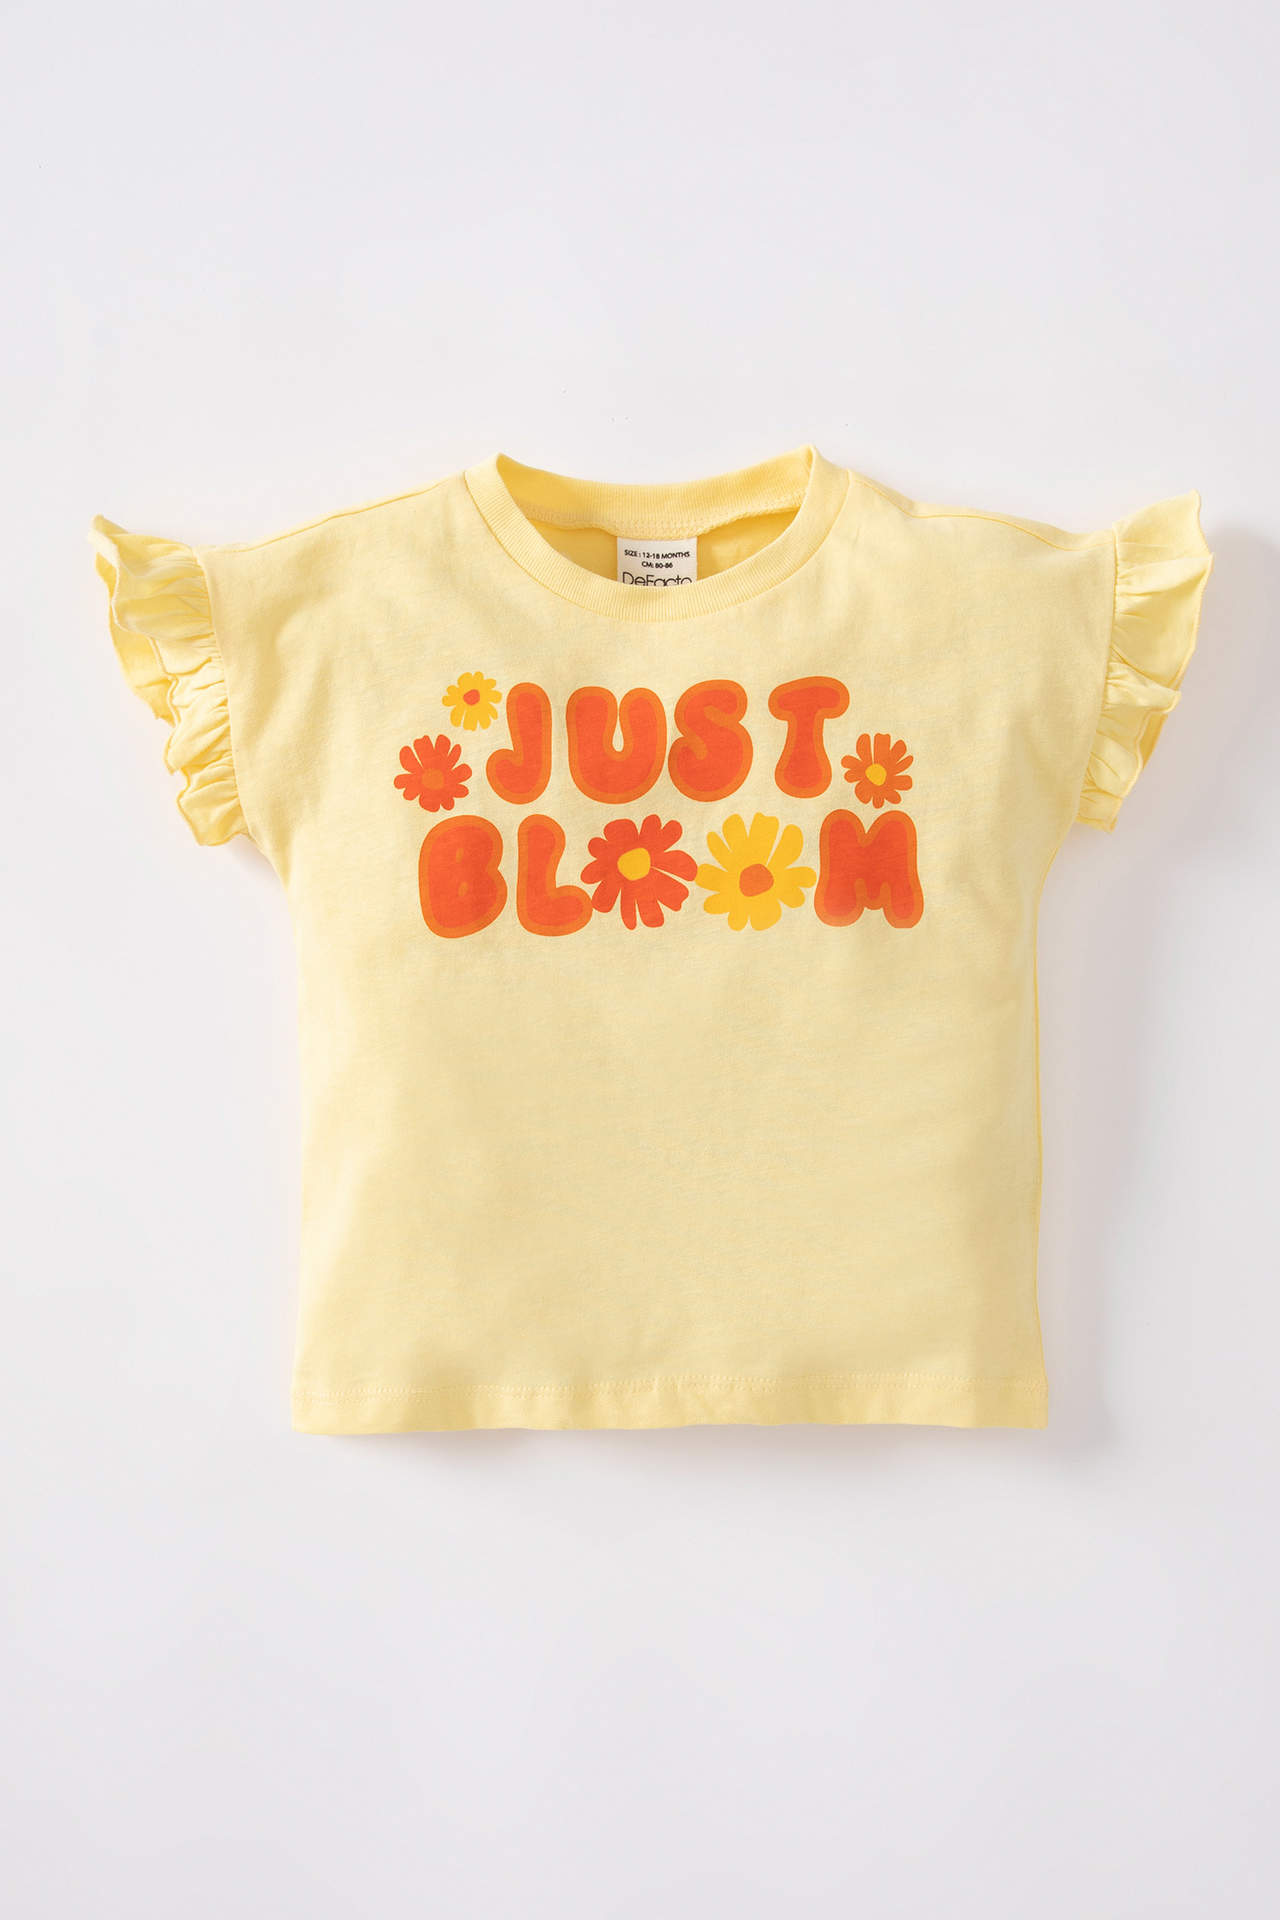 DEFACTO Baby Girl Regular Fit Crew Neck Slogan Printed Short Sleeved T-Shirt